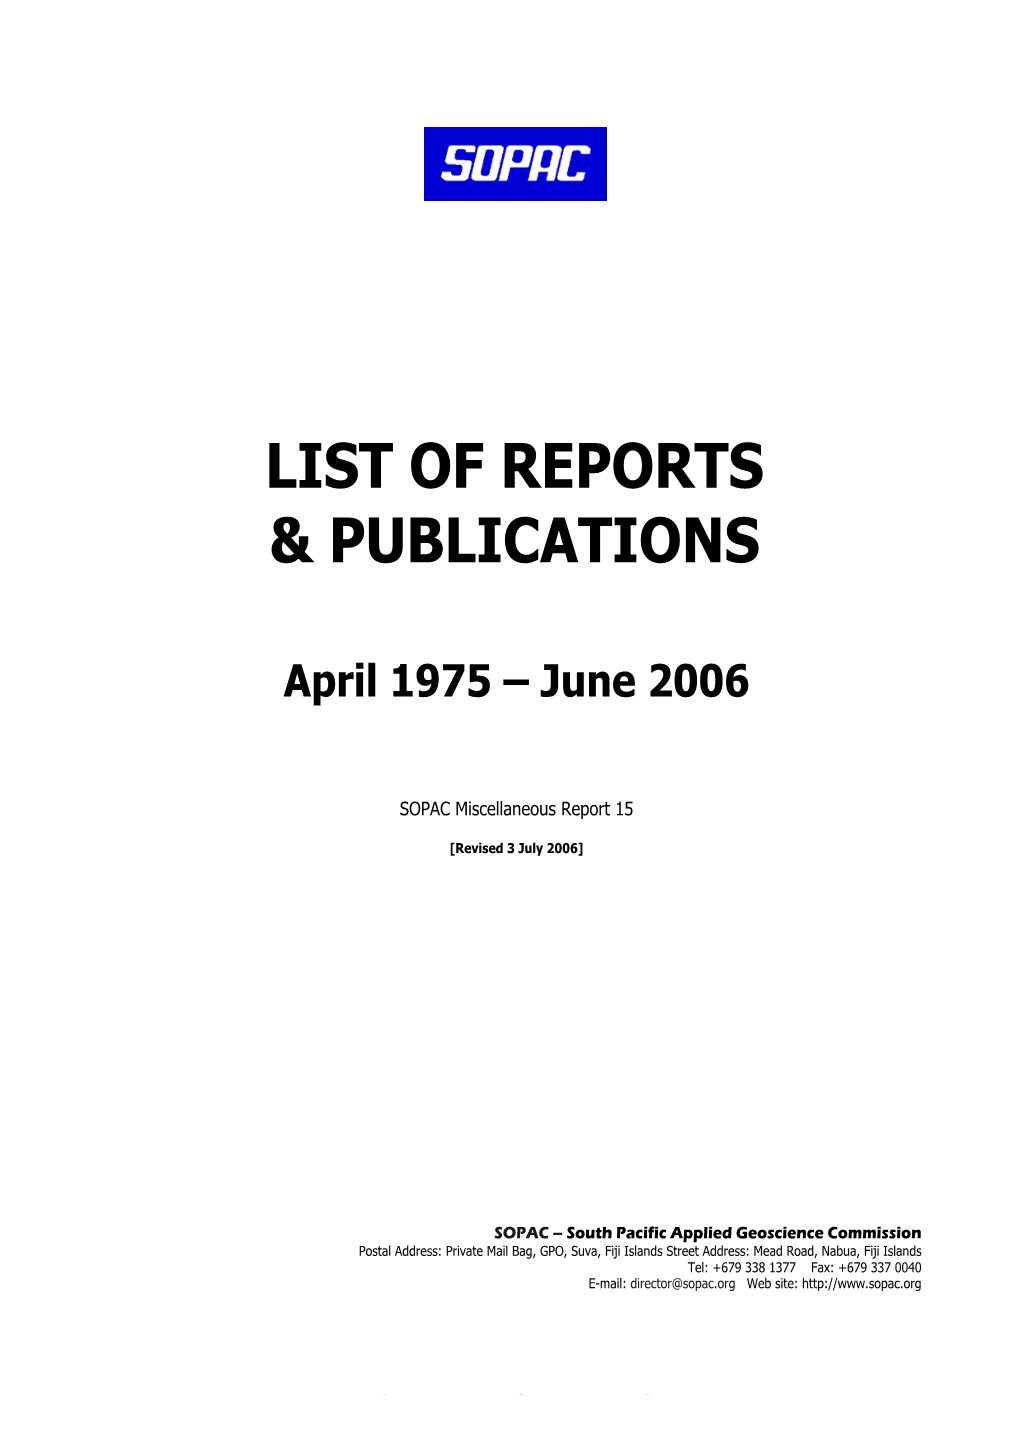 List of Reports & Publications, April 1975